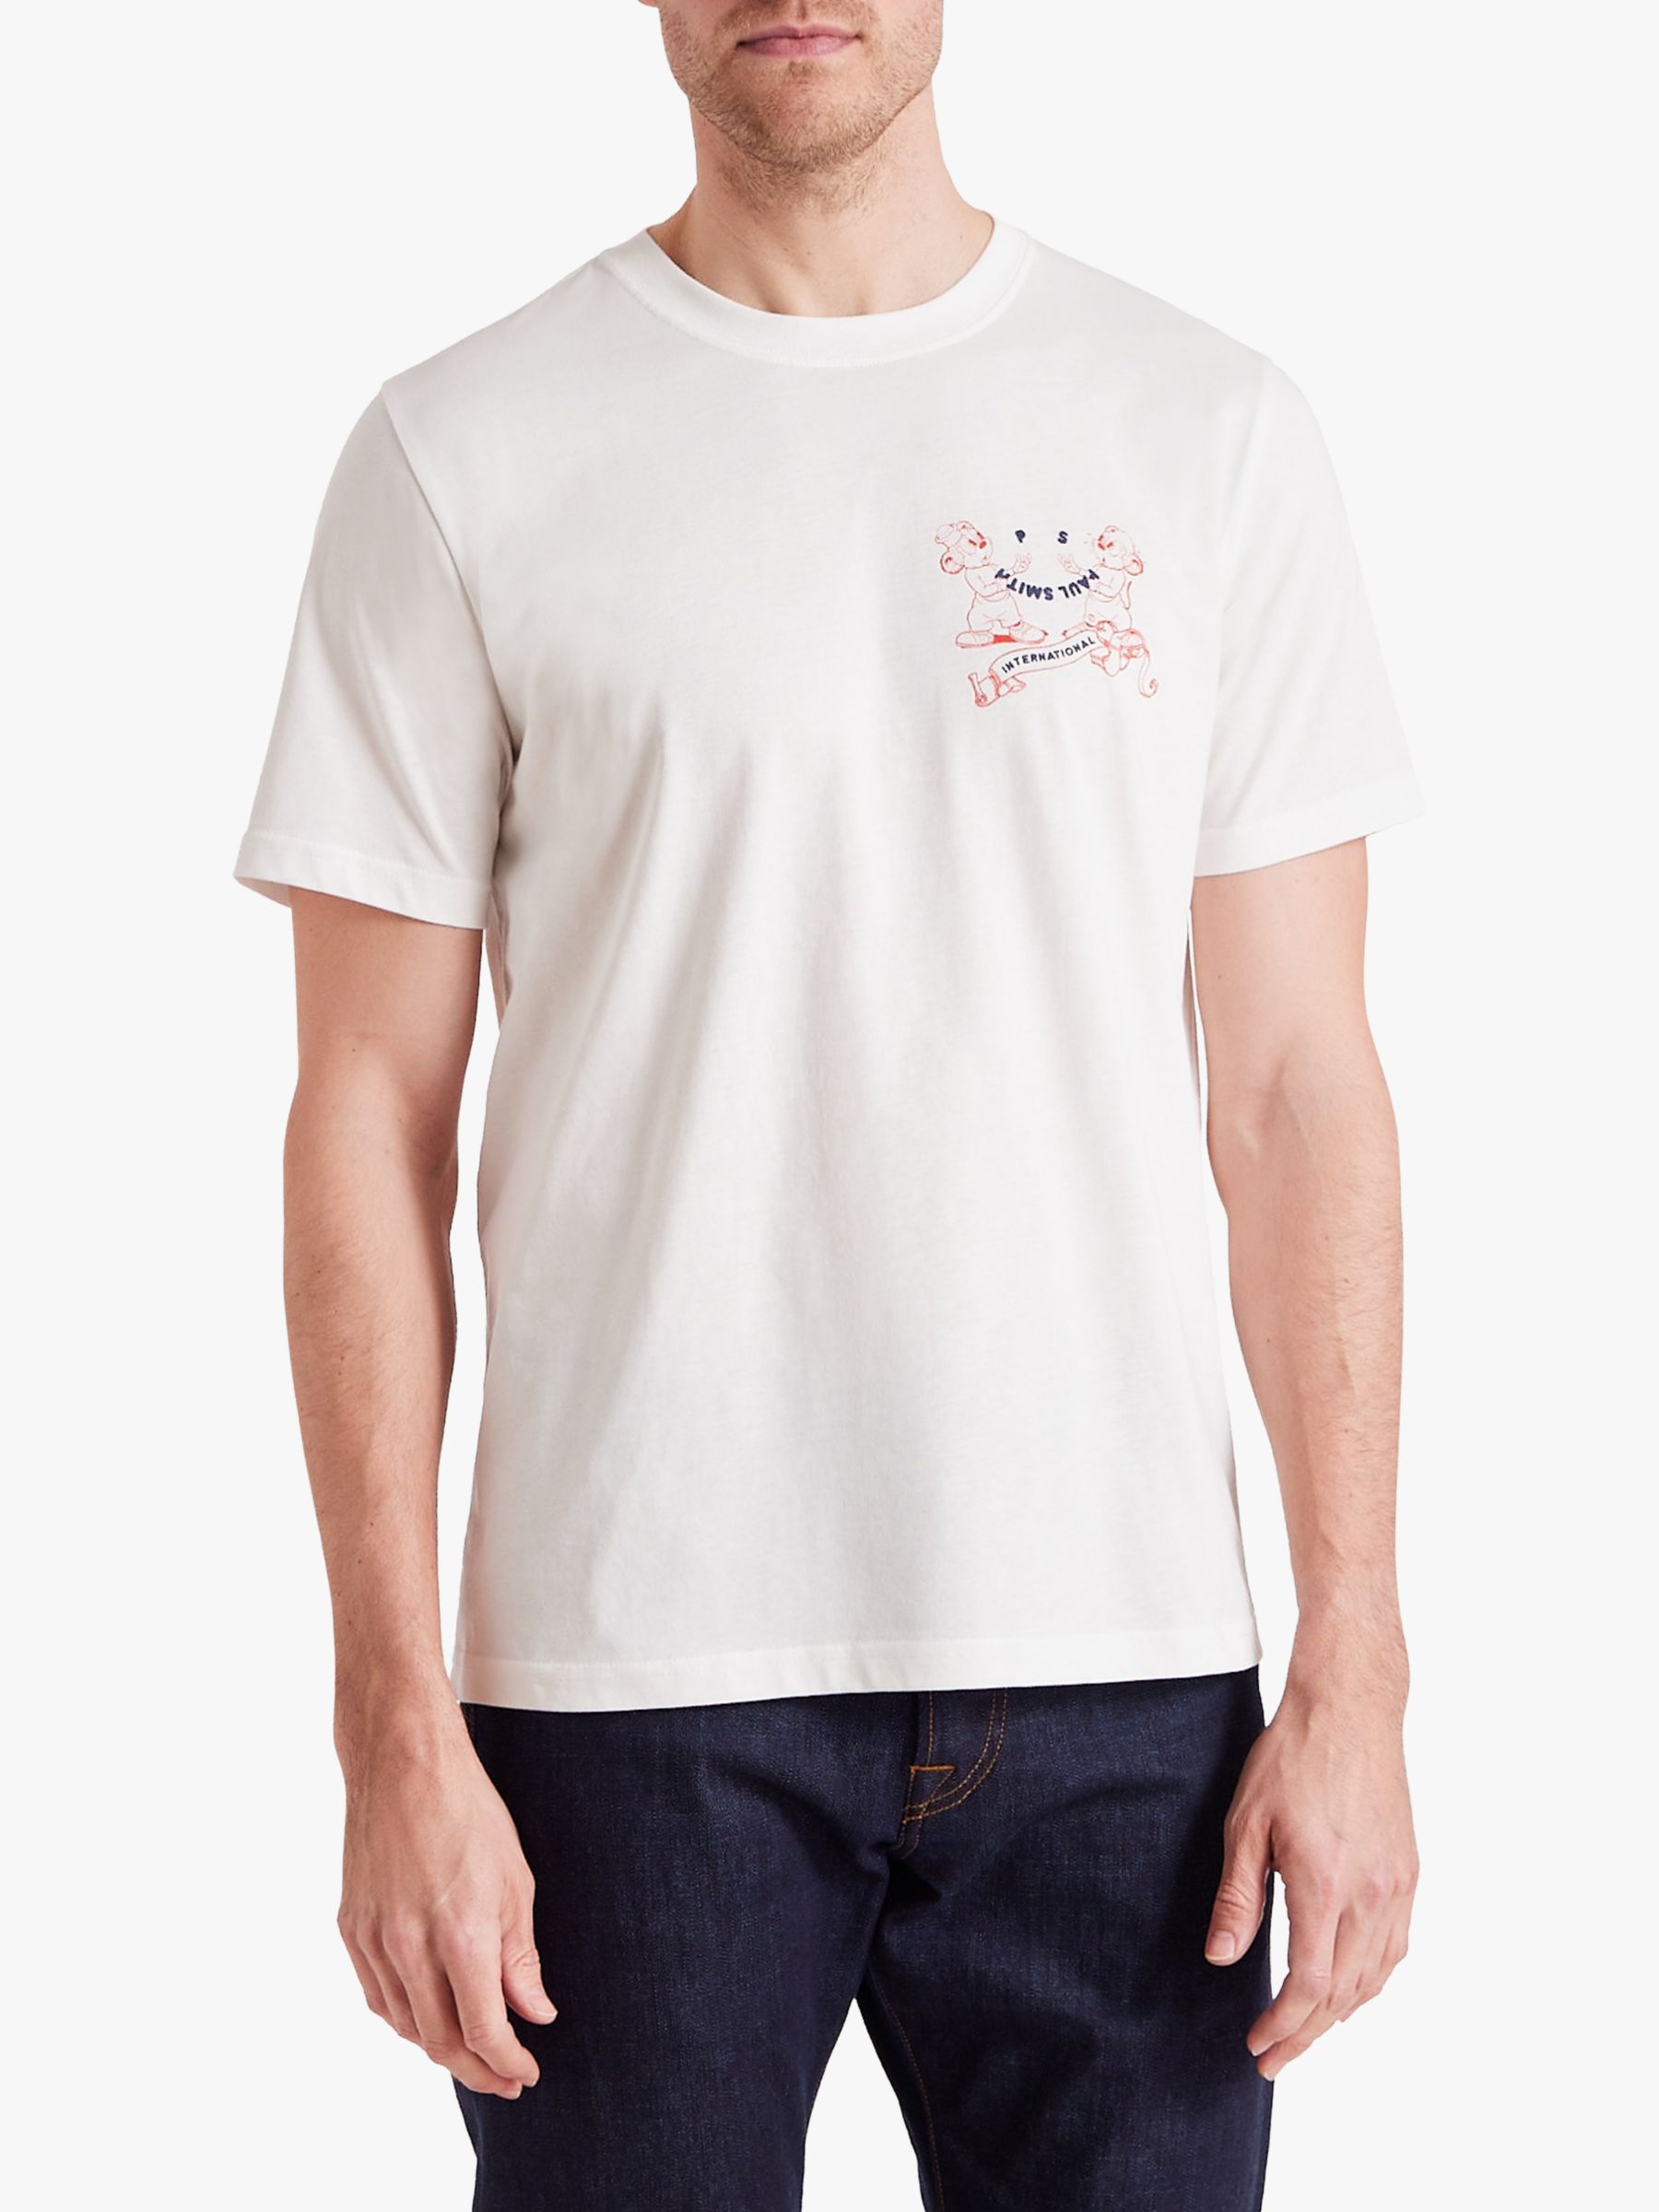 Paul Smith Short Sleeve T-Shirt, White, S